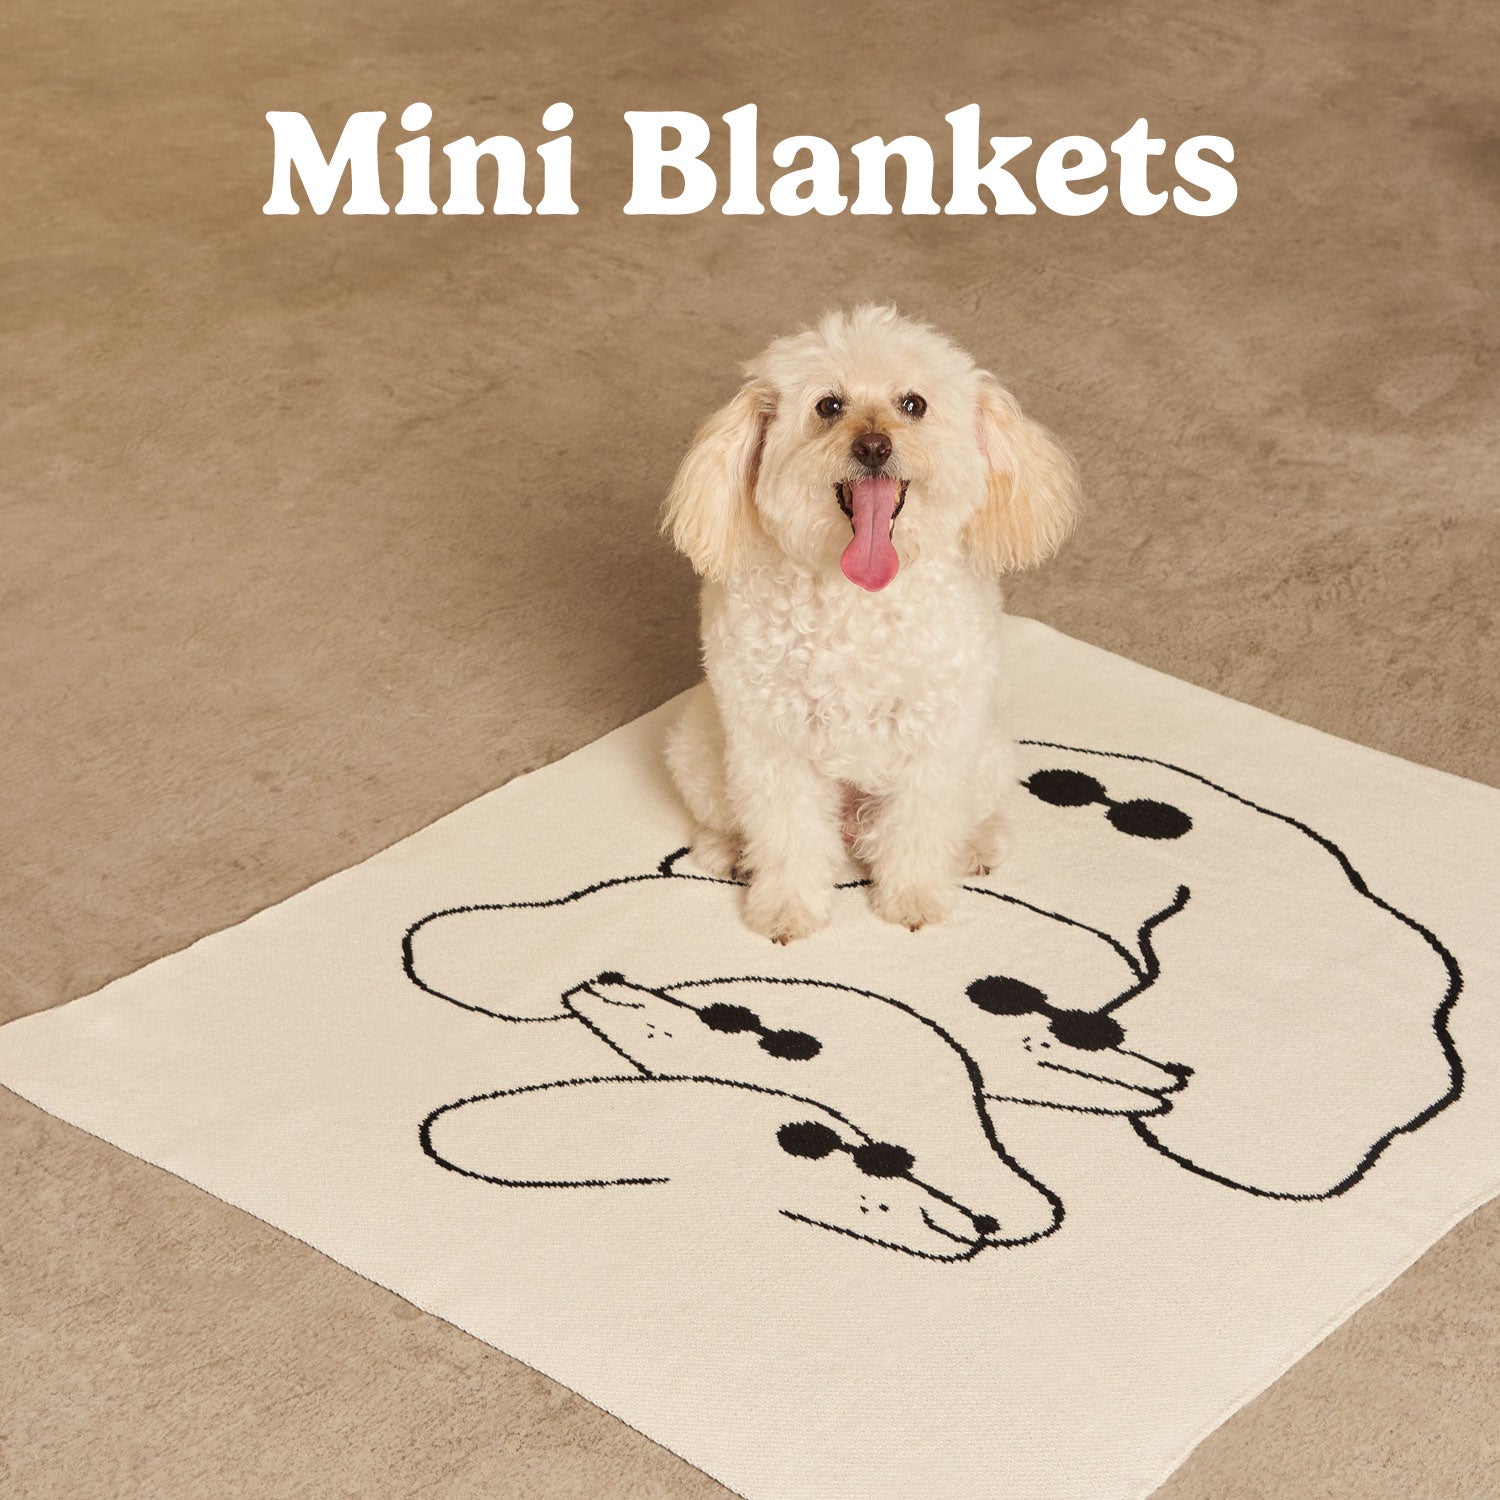 Mini Blankets